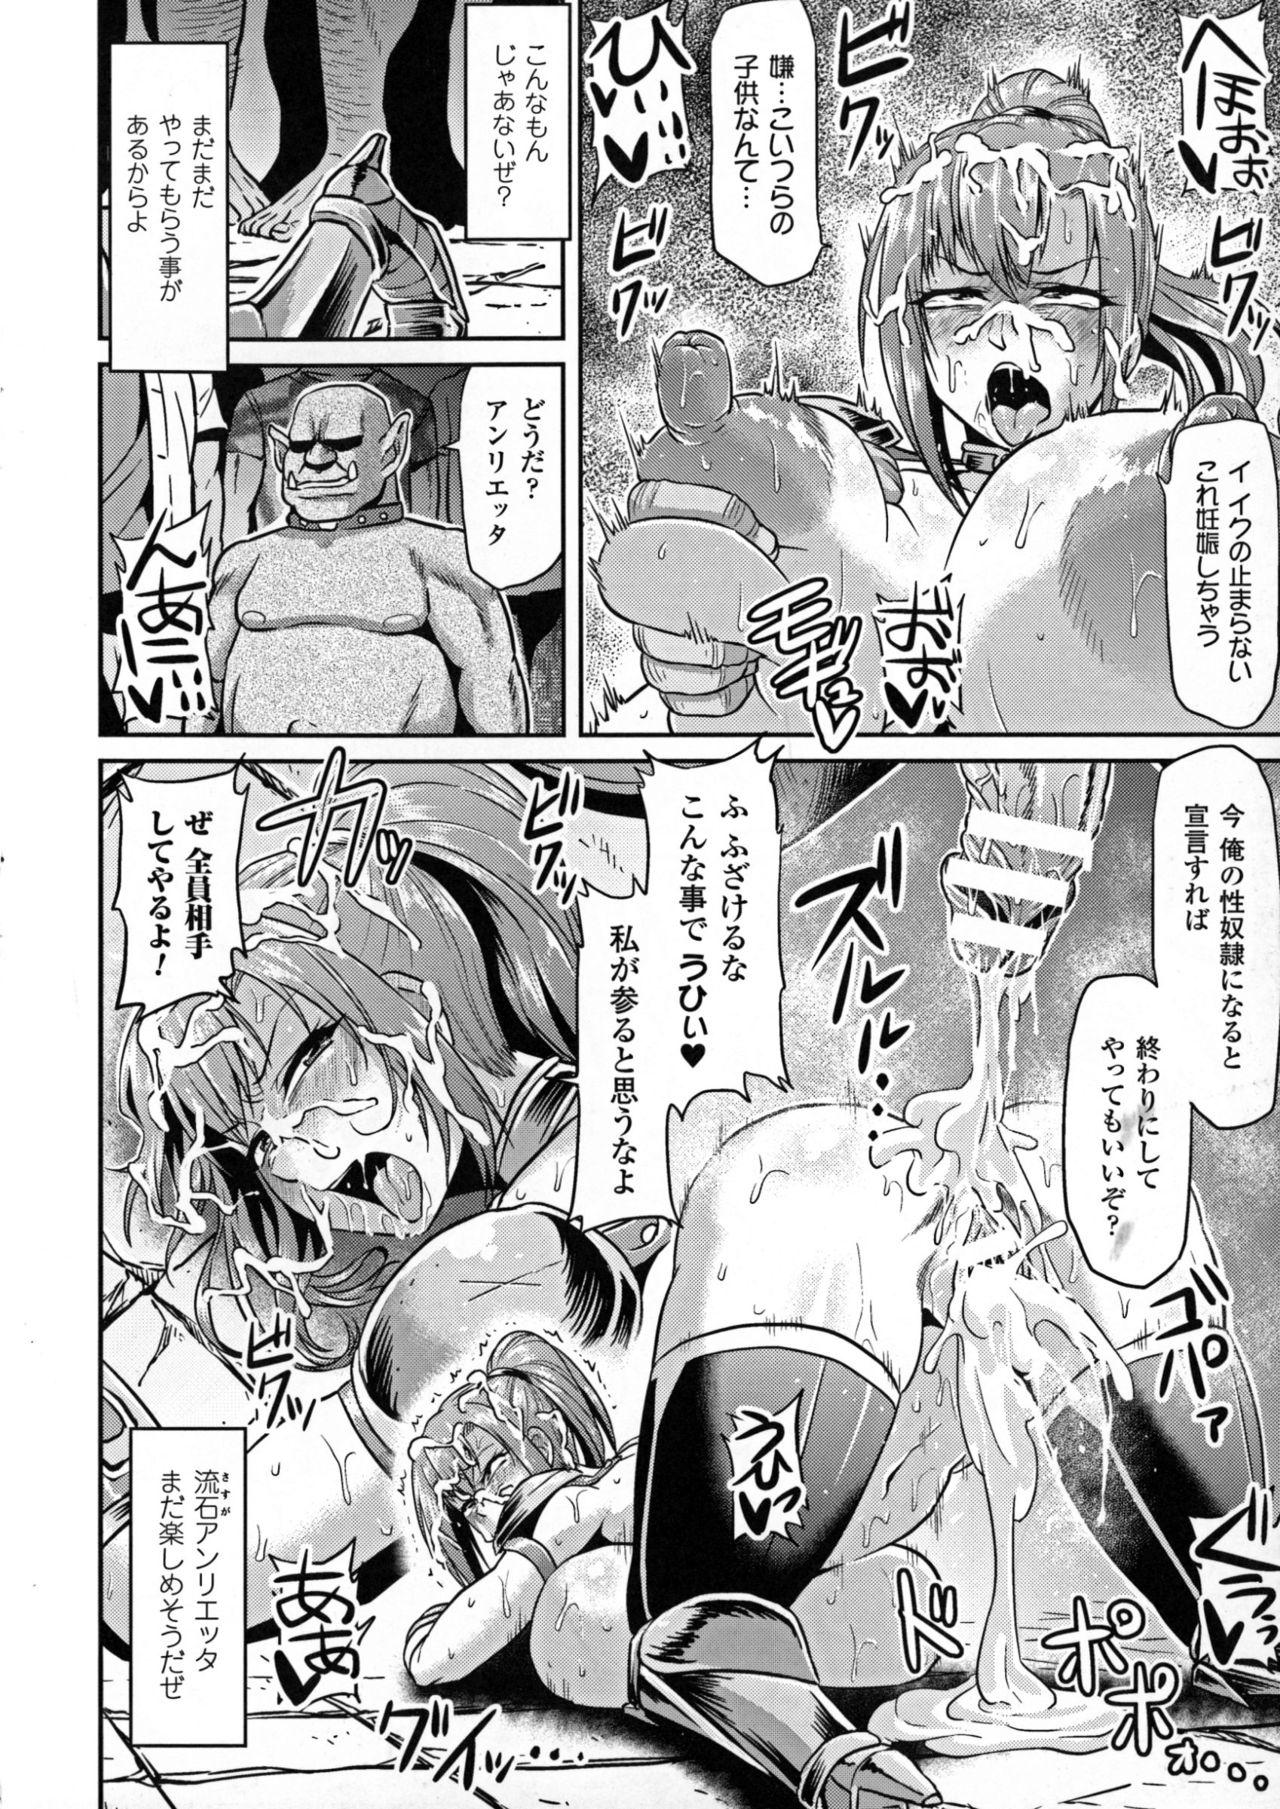 Seigi no Heroine Kangoku File DX Vol. 7 149